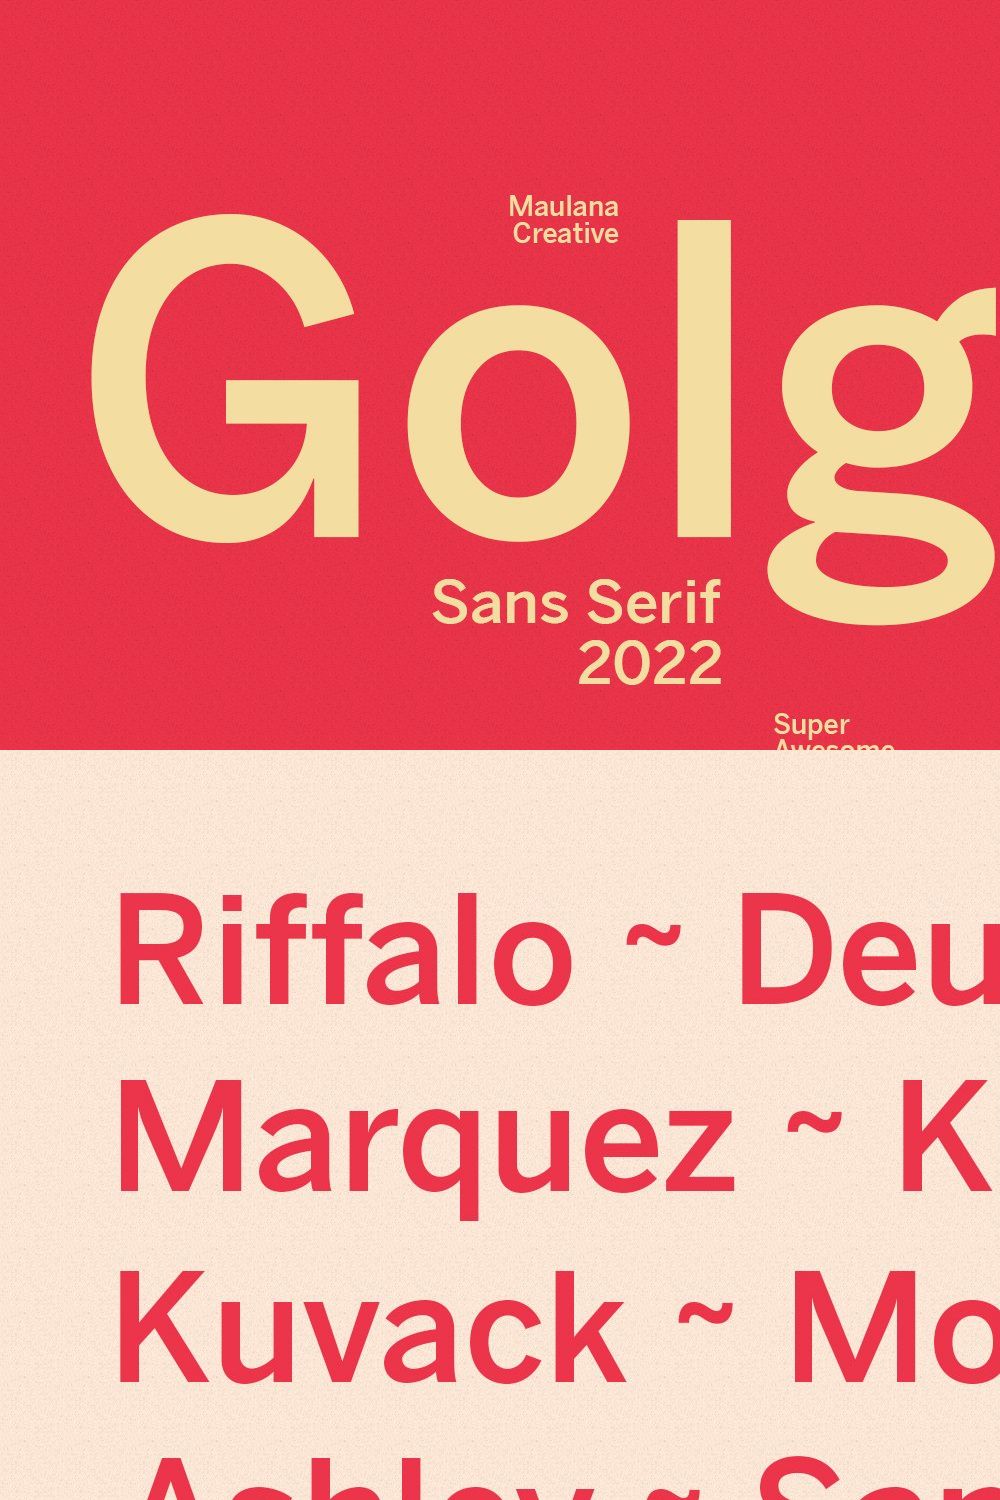 Golger Sans Serif Font pinterest preview image.